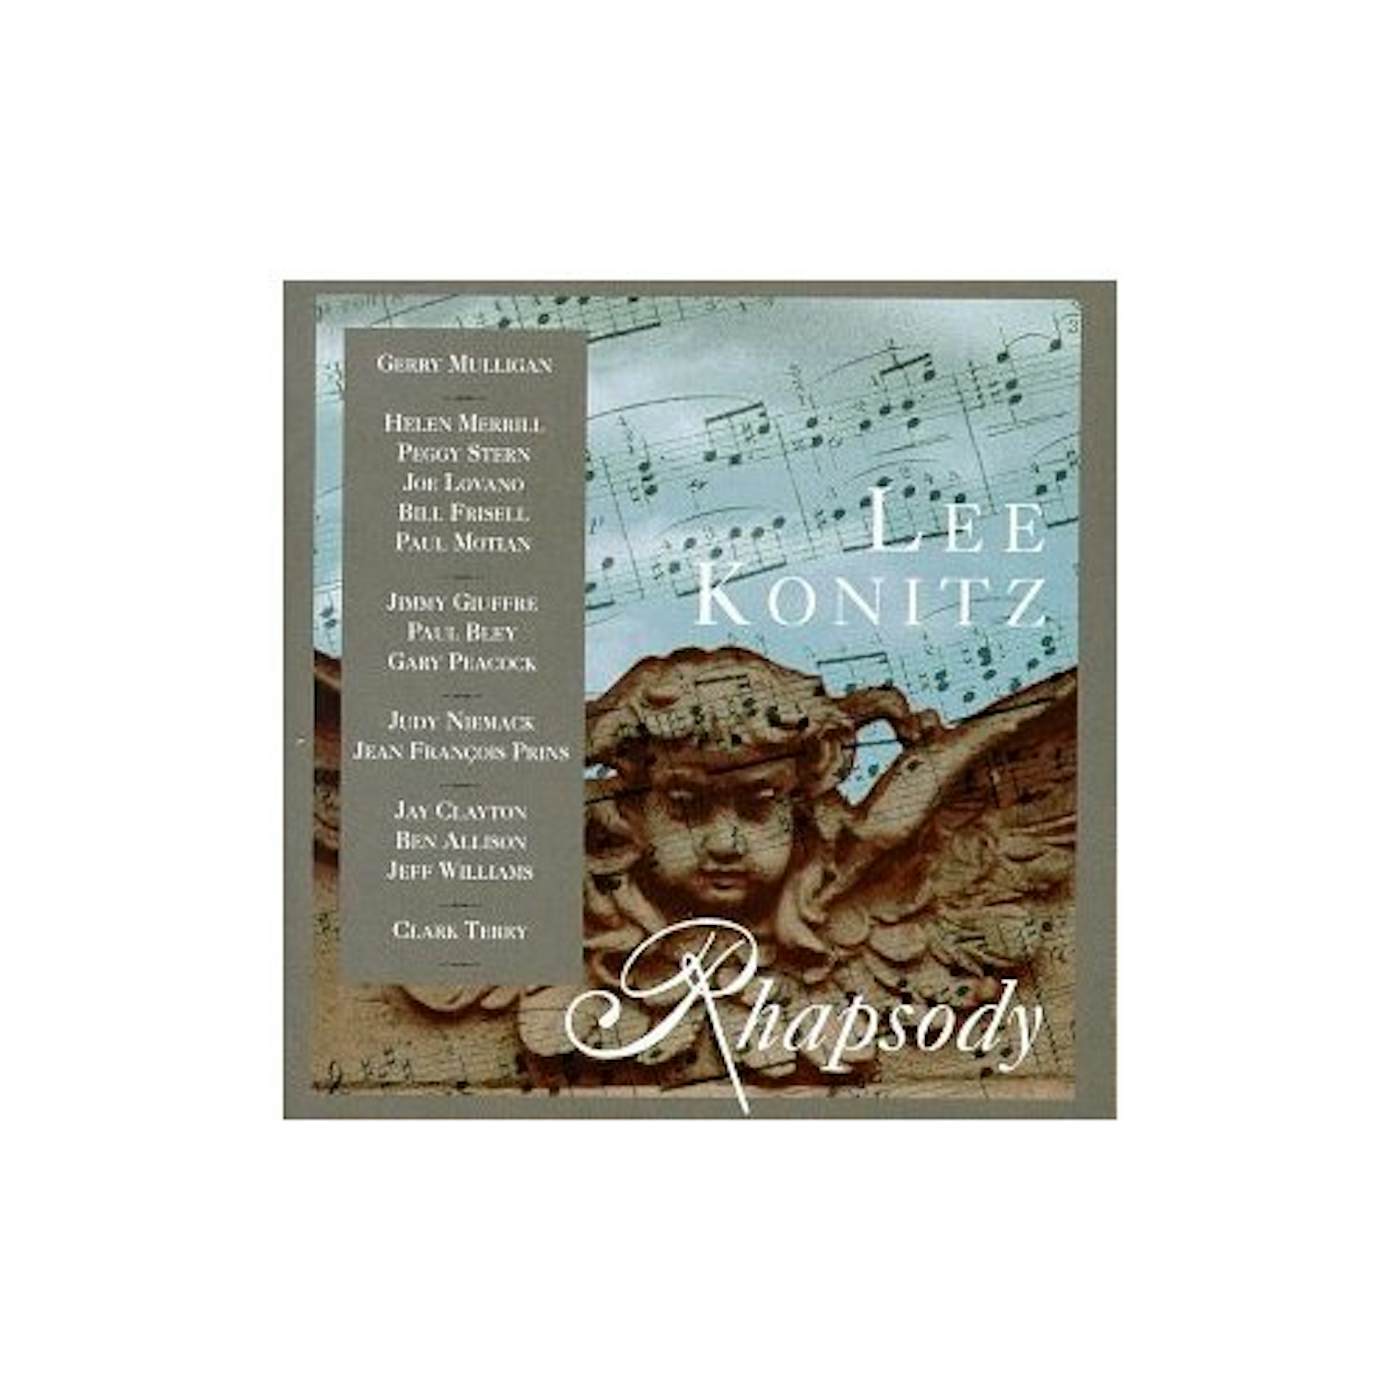 Lee Konitz RHAPSODY CD